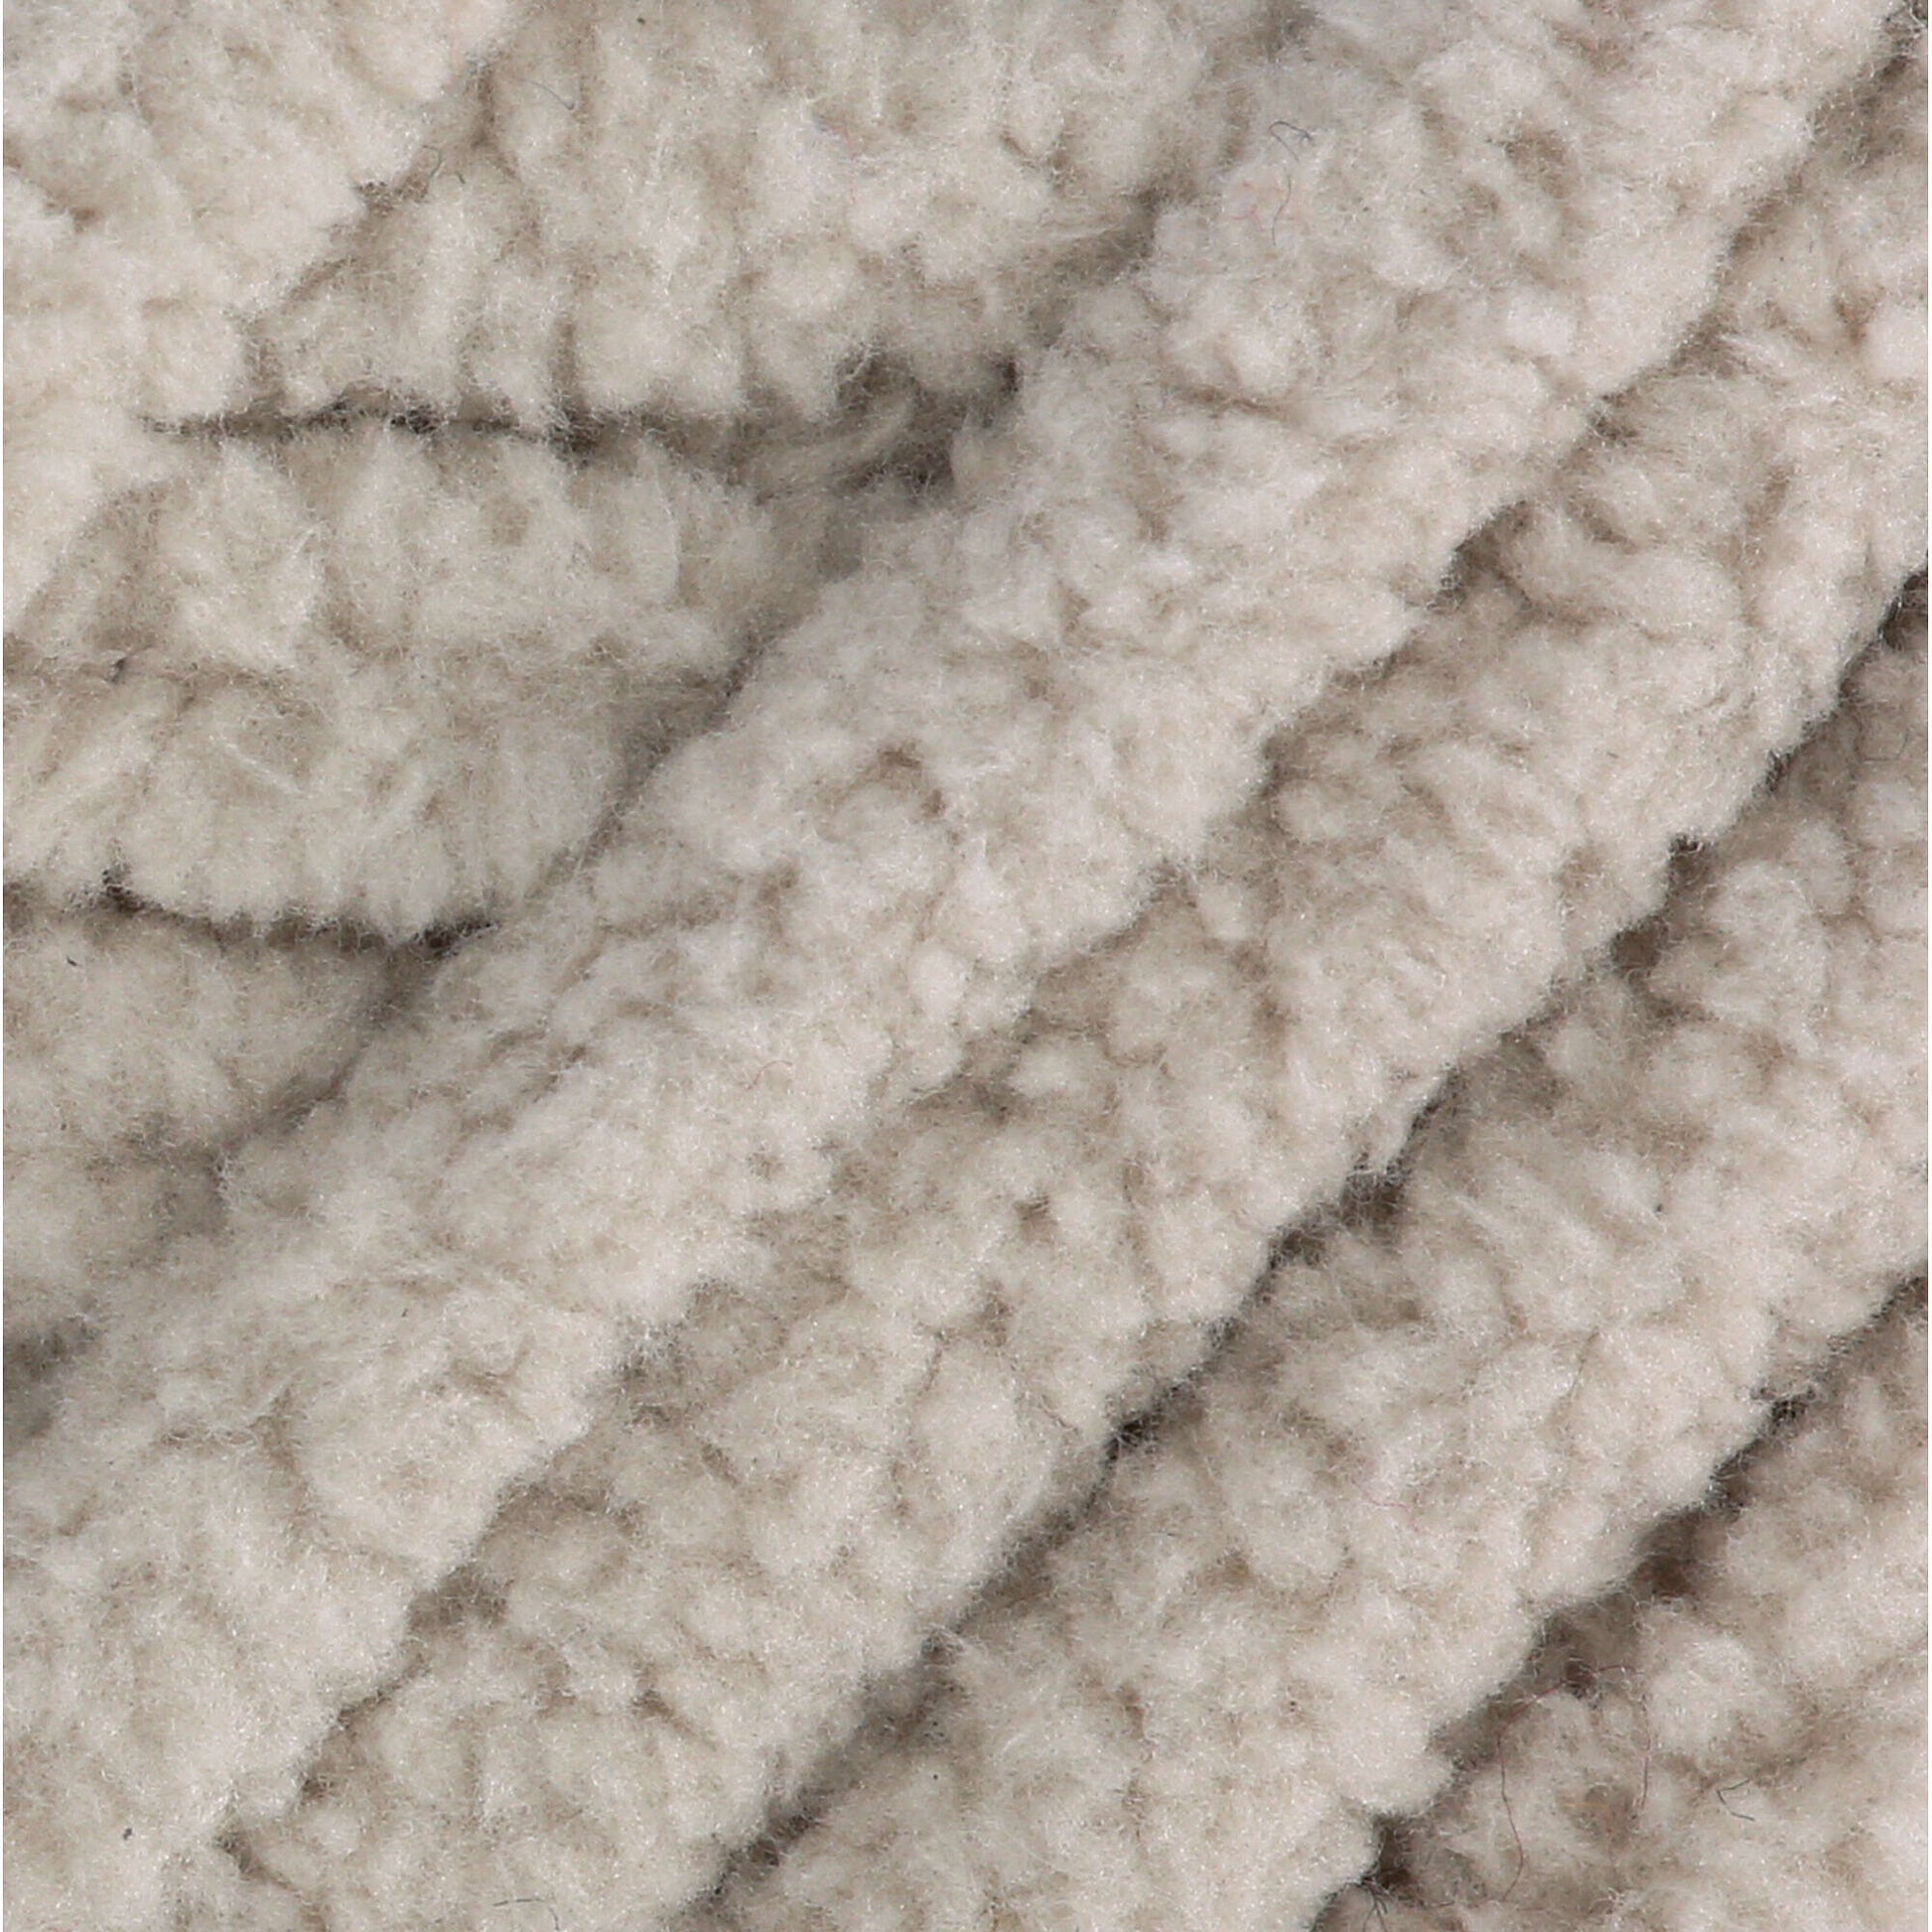 Bernat Baby Blanket Yarn - Discontinued Shades